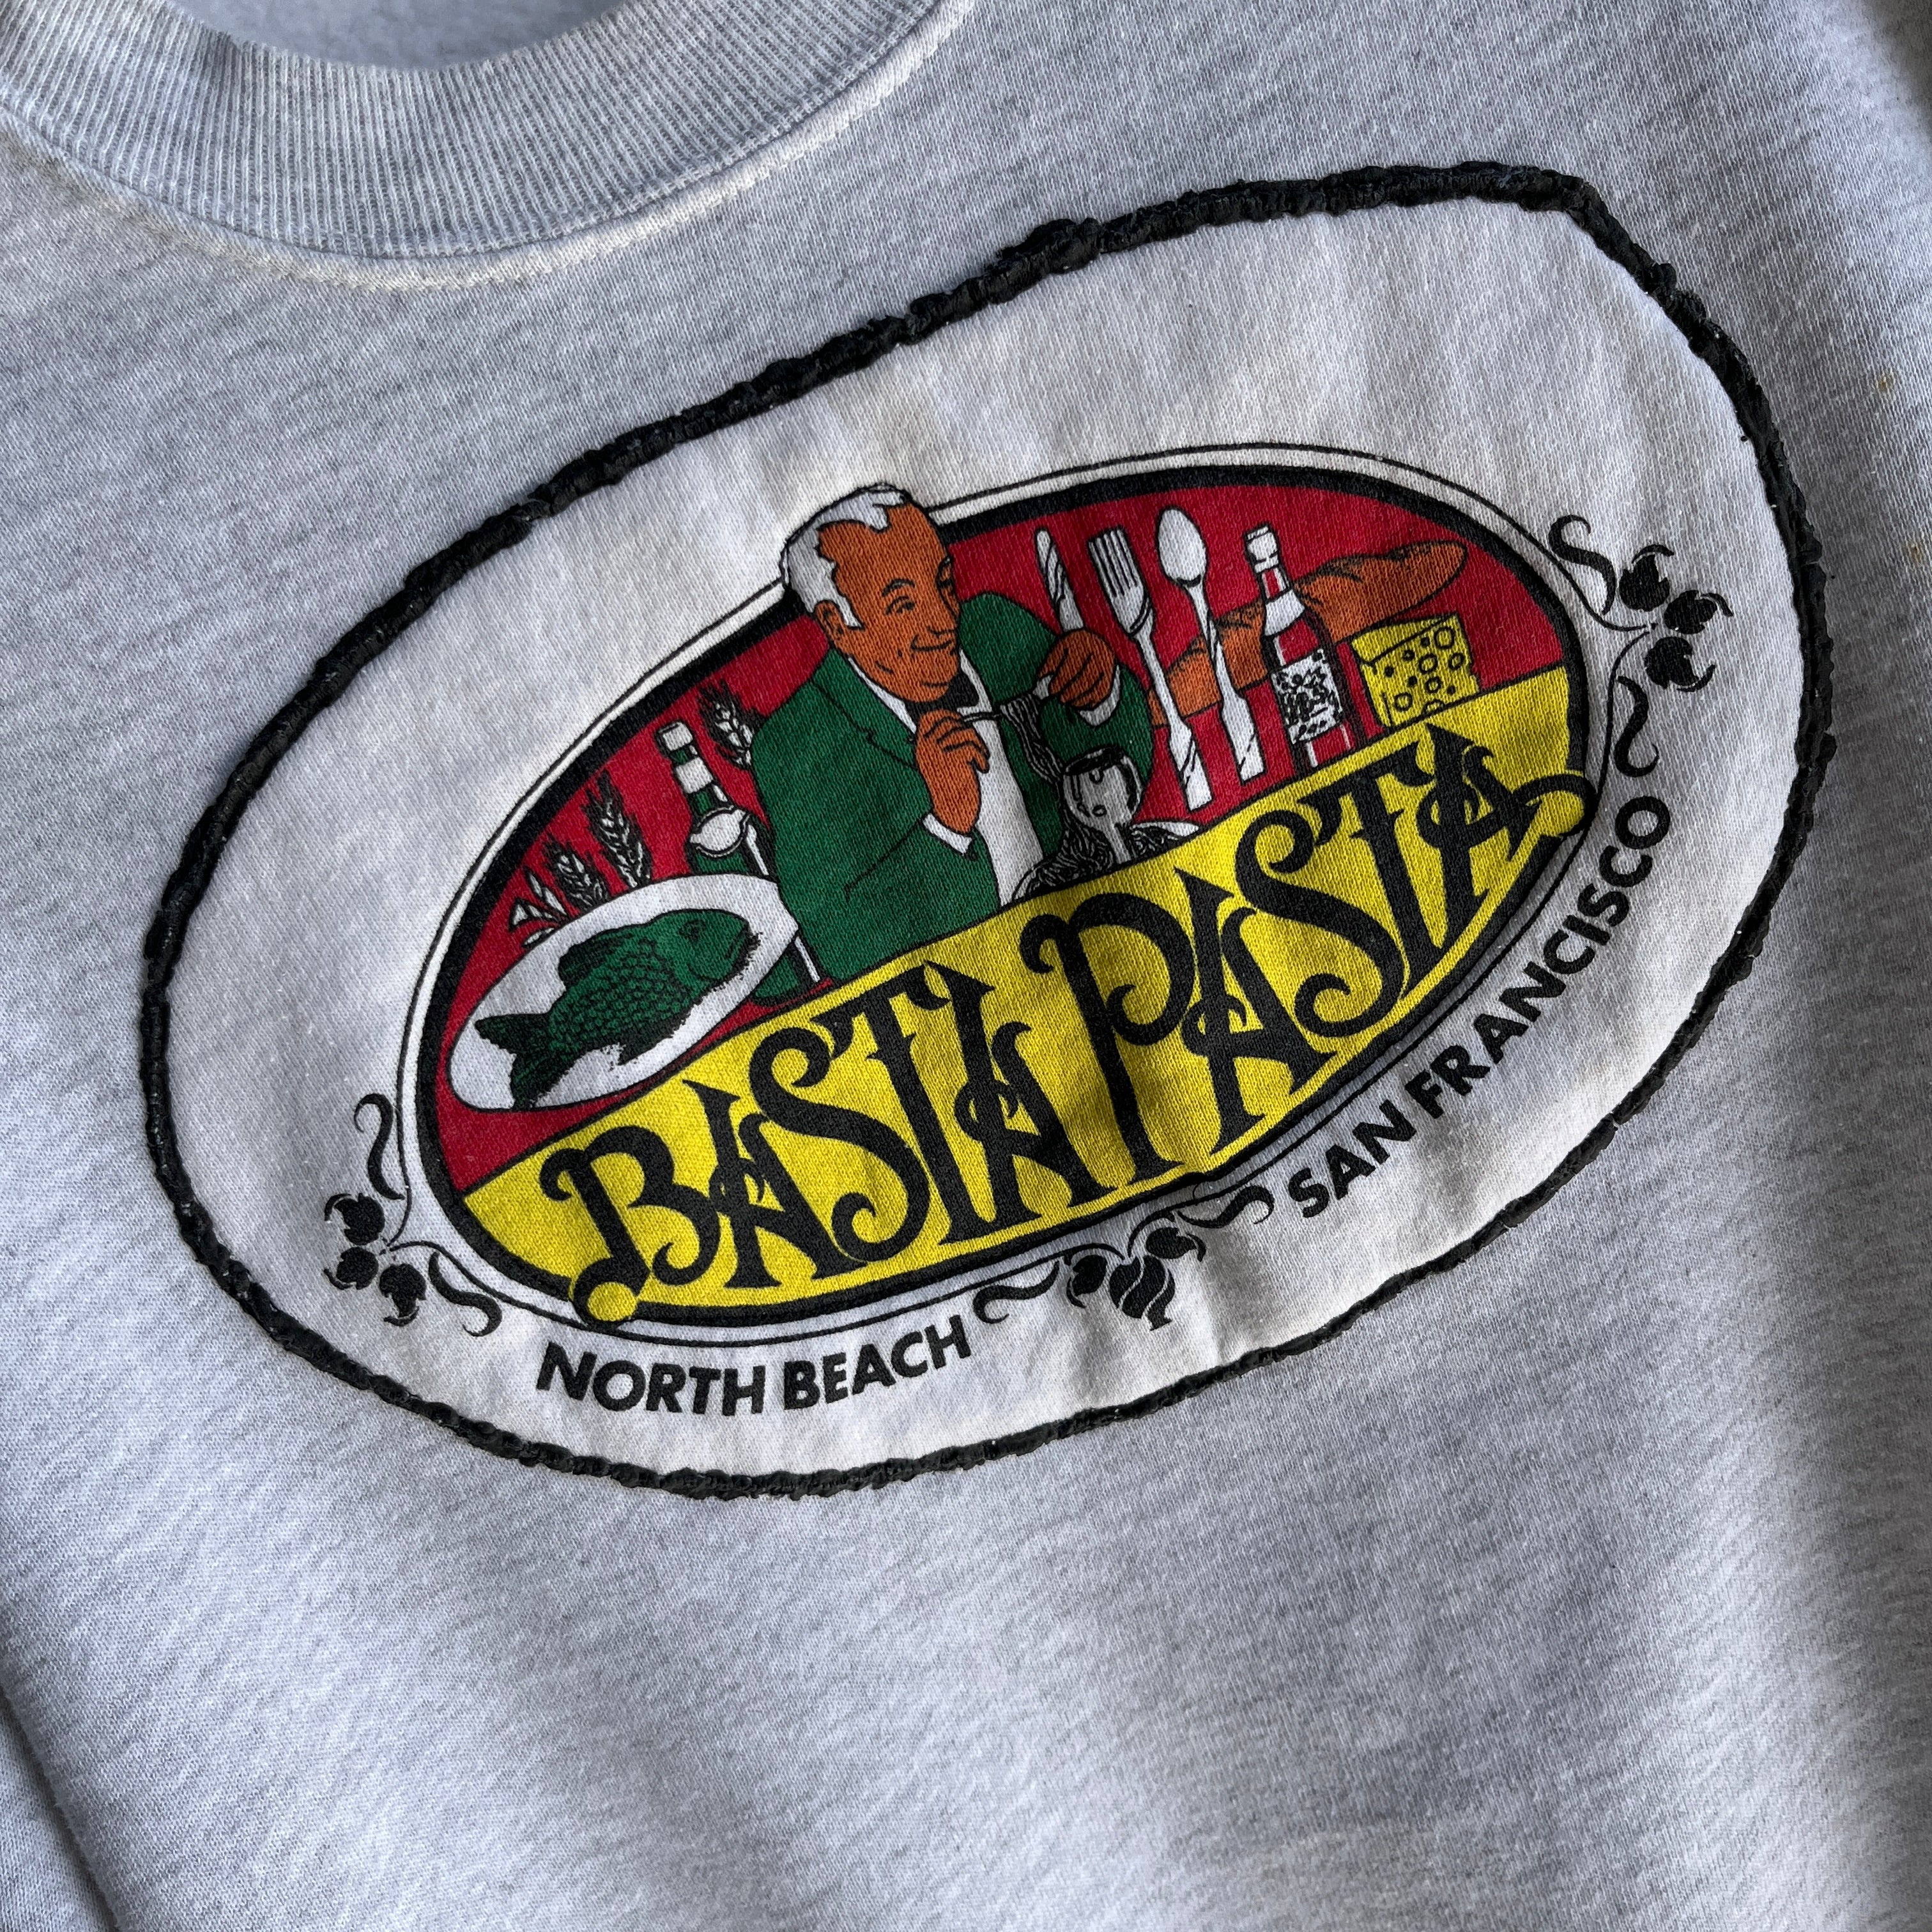 1980/90s Basta Pasta, San Francisco DIY? Sweatshirt